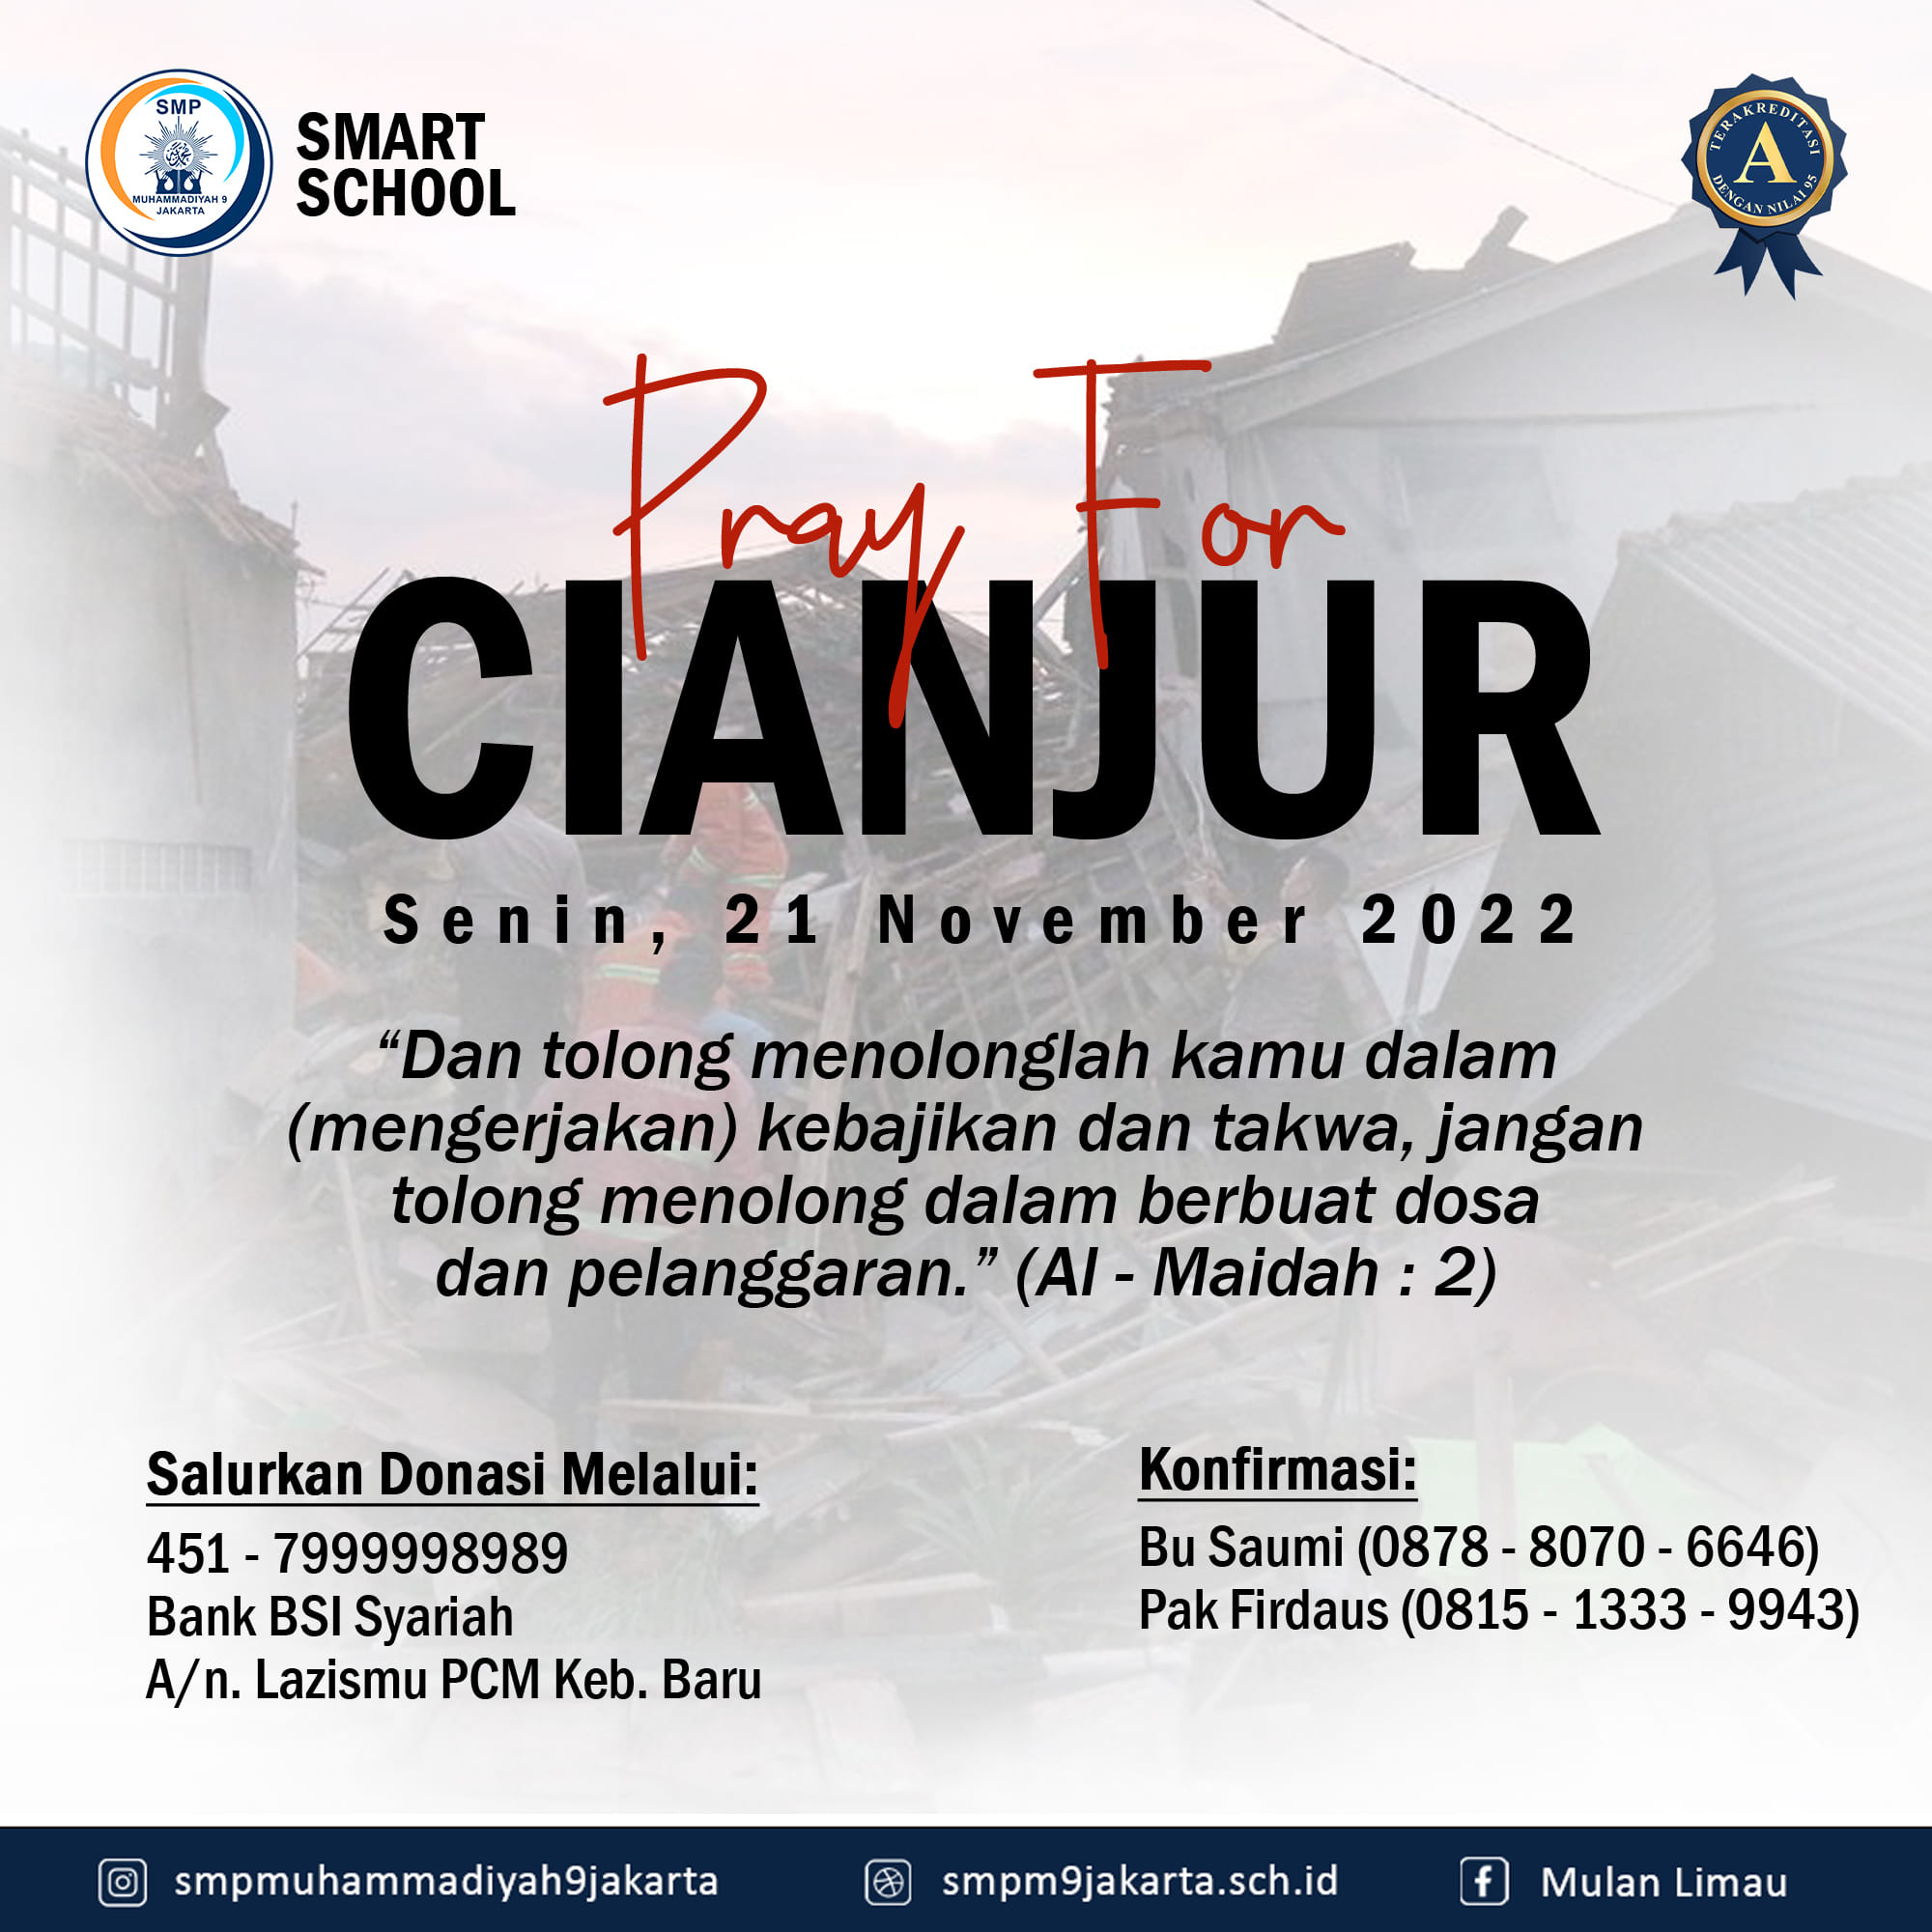 Pray for Cianjur